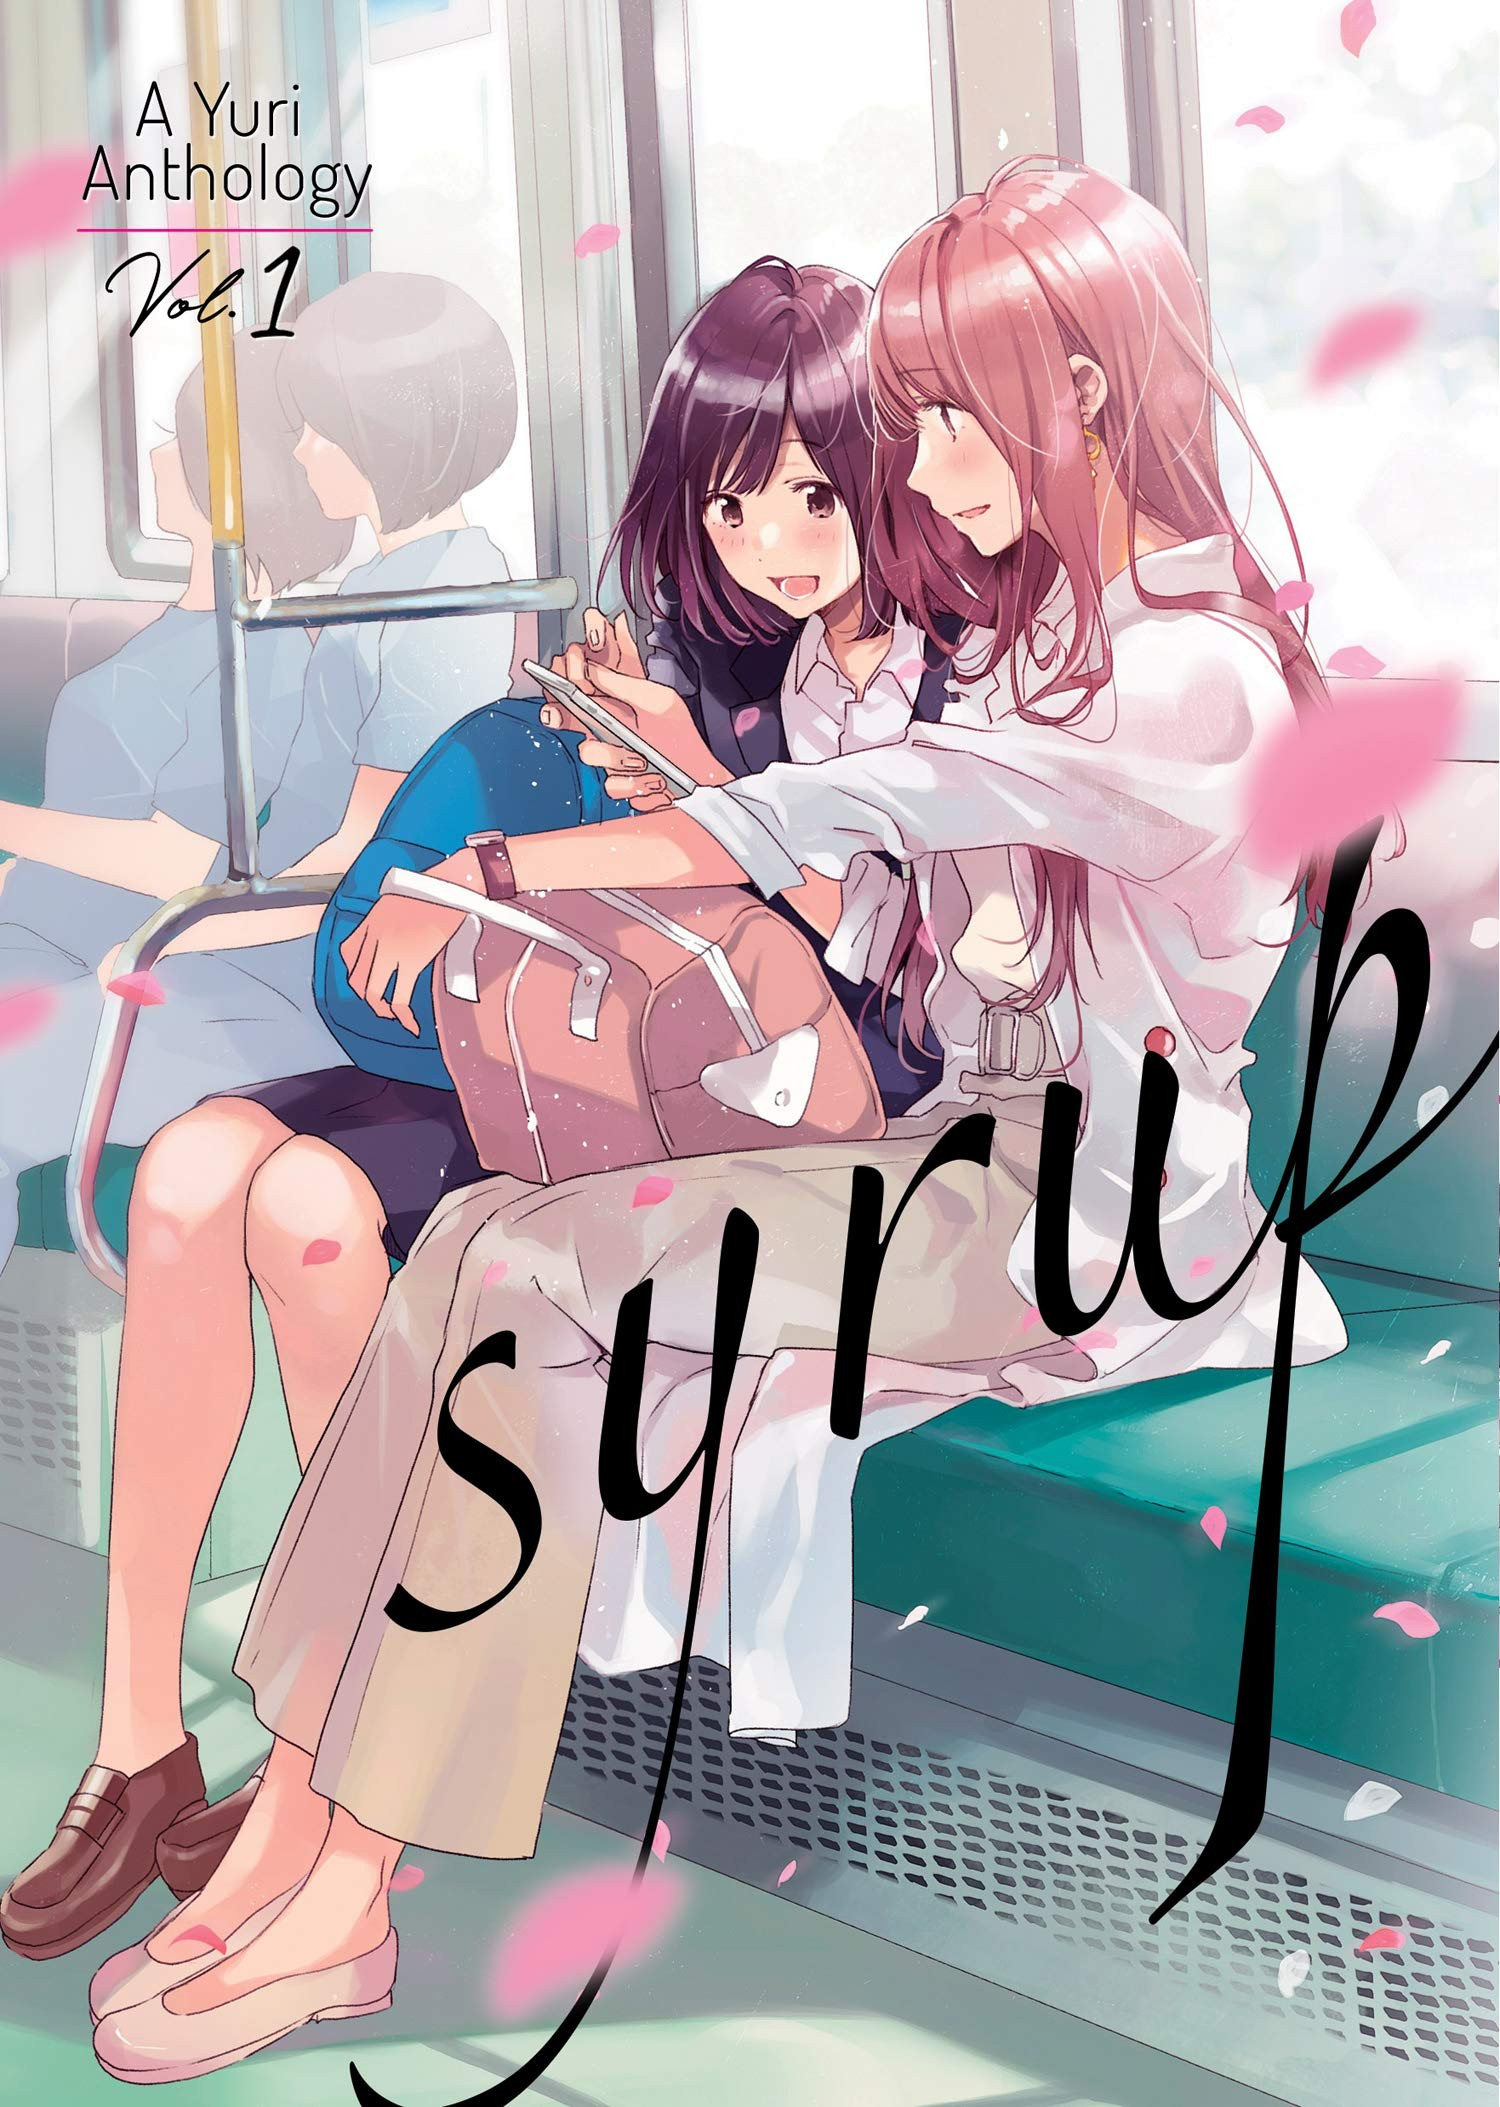 Syrup - A Yuri Anthology 1 